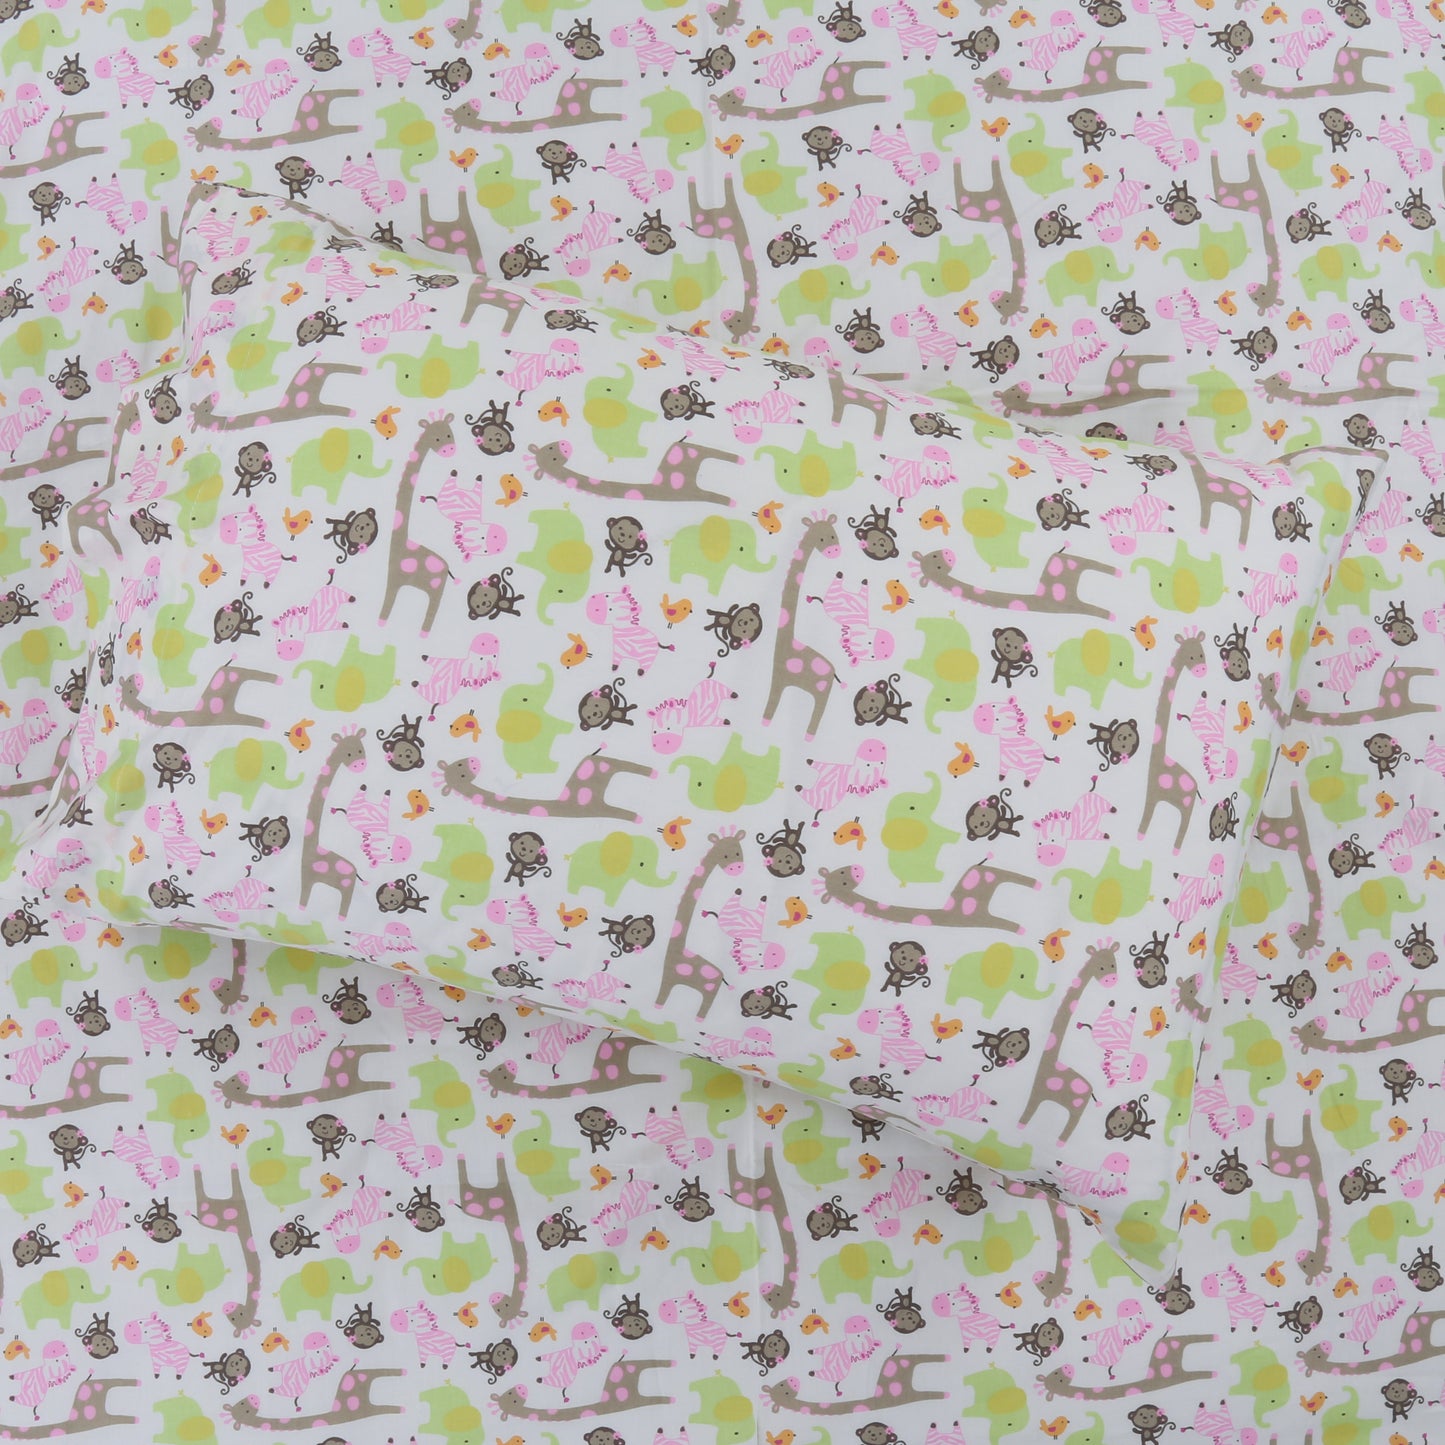 3-Piece Crib/Toddler Cotton Sheet Set Pink Jungle Zoo Animal Friends Giraffe Monkey Elephant Zebra Bird